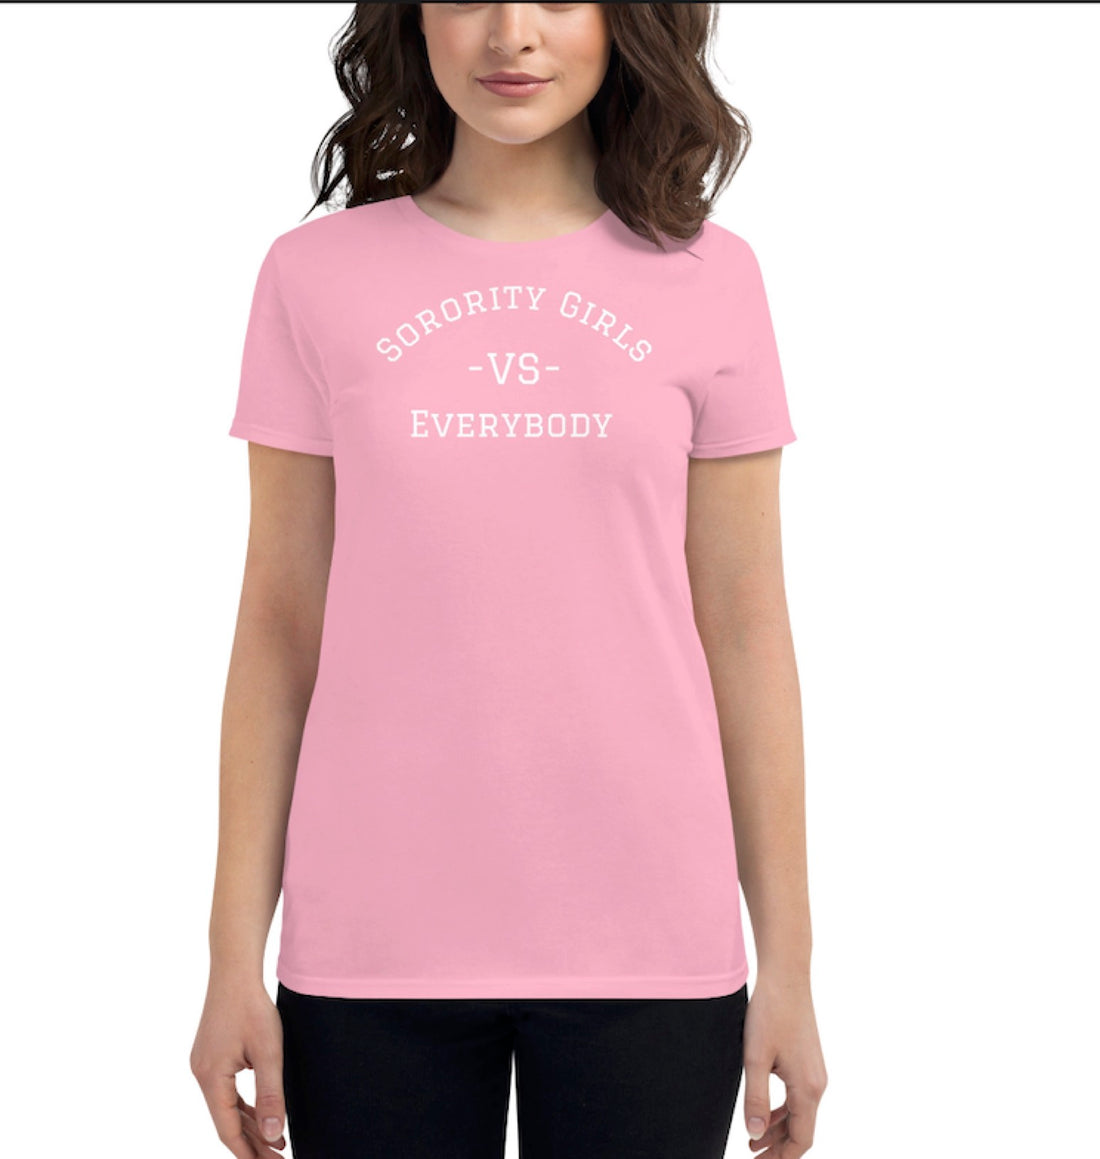 "Sorority Girls VS Everybody" Pink Tee at Collegebarbook.com